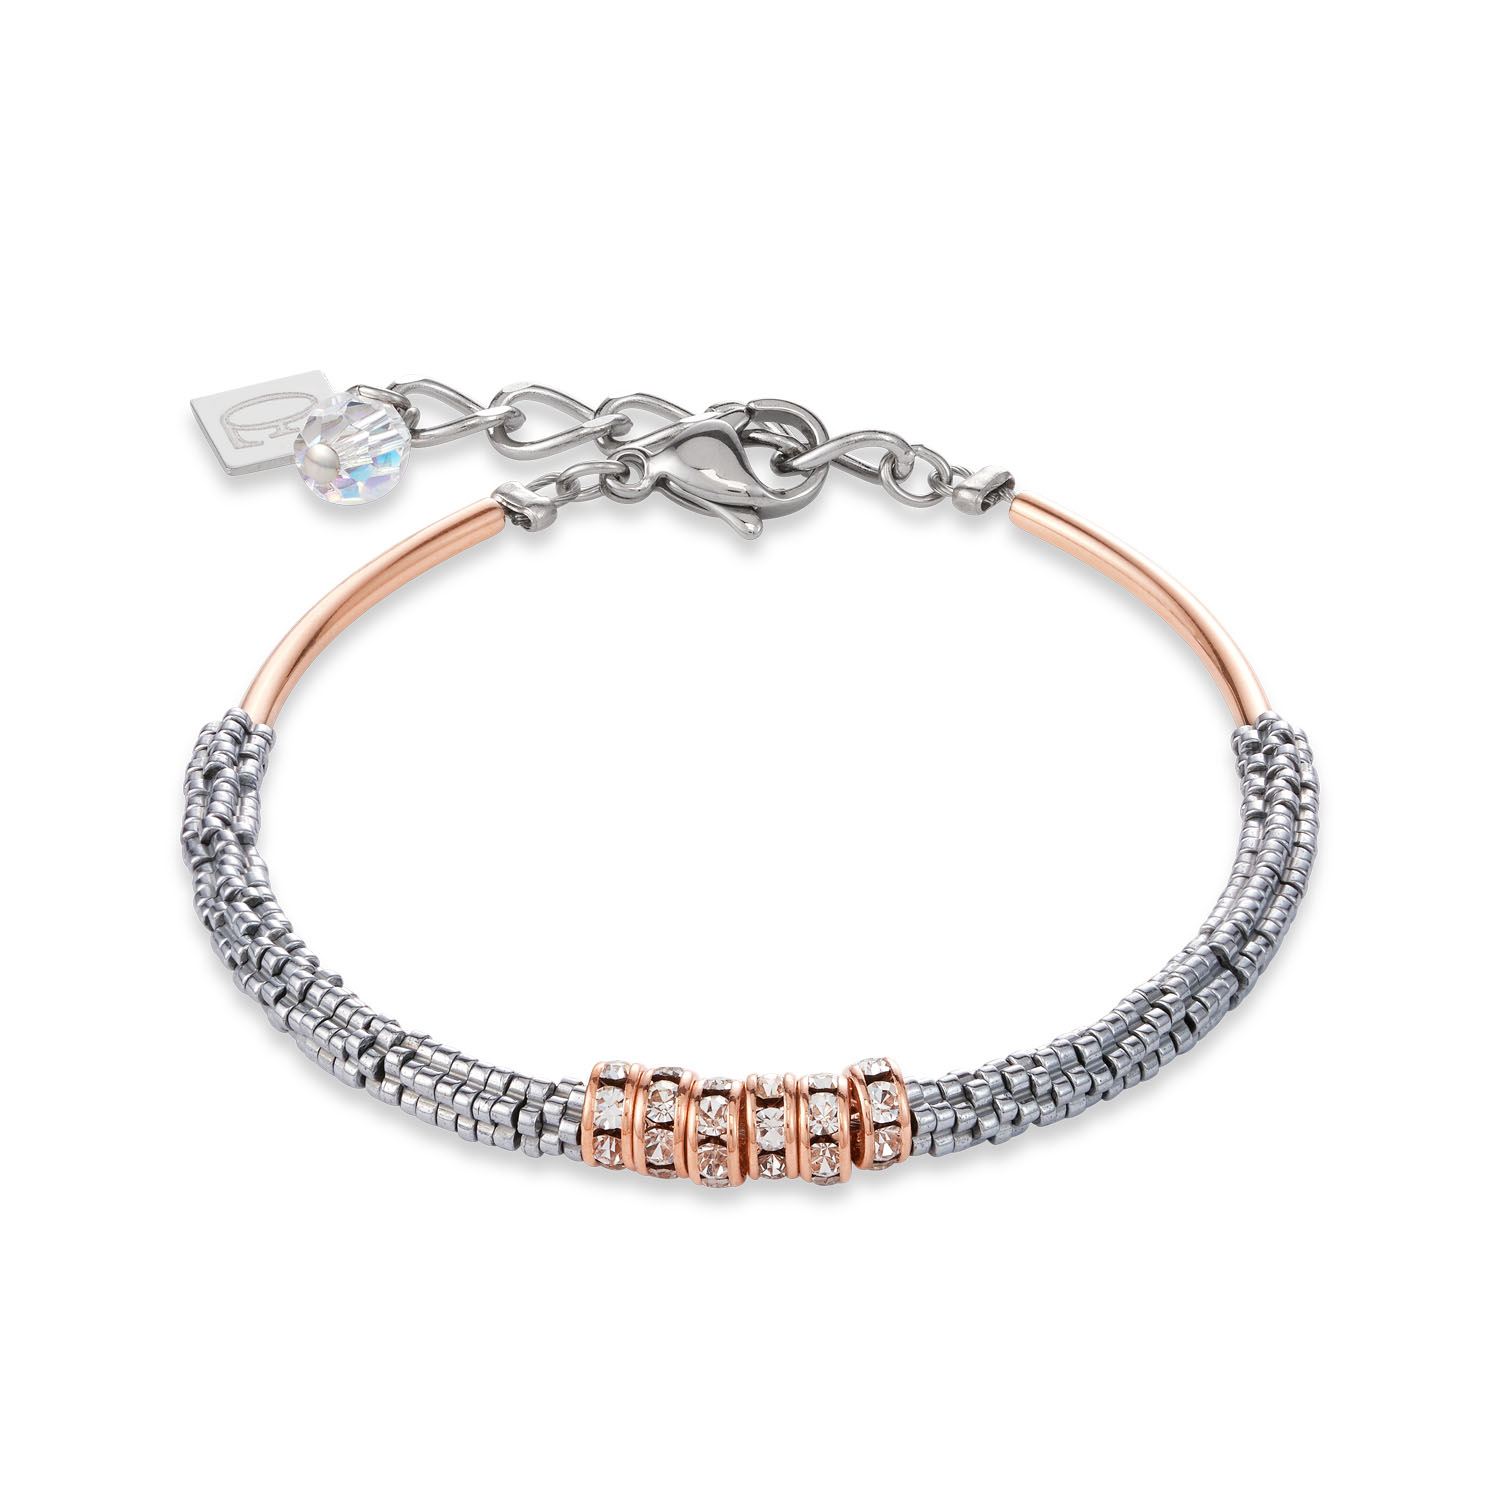 Wholesale American Custom made bracelet silver cubic zirconia fashion jewelry wholesaler OEM/ODM Jewelry